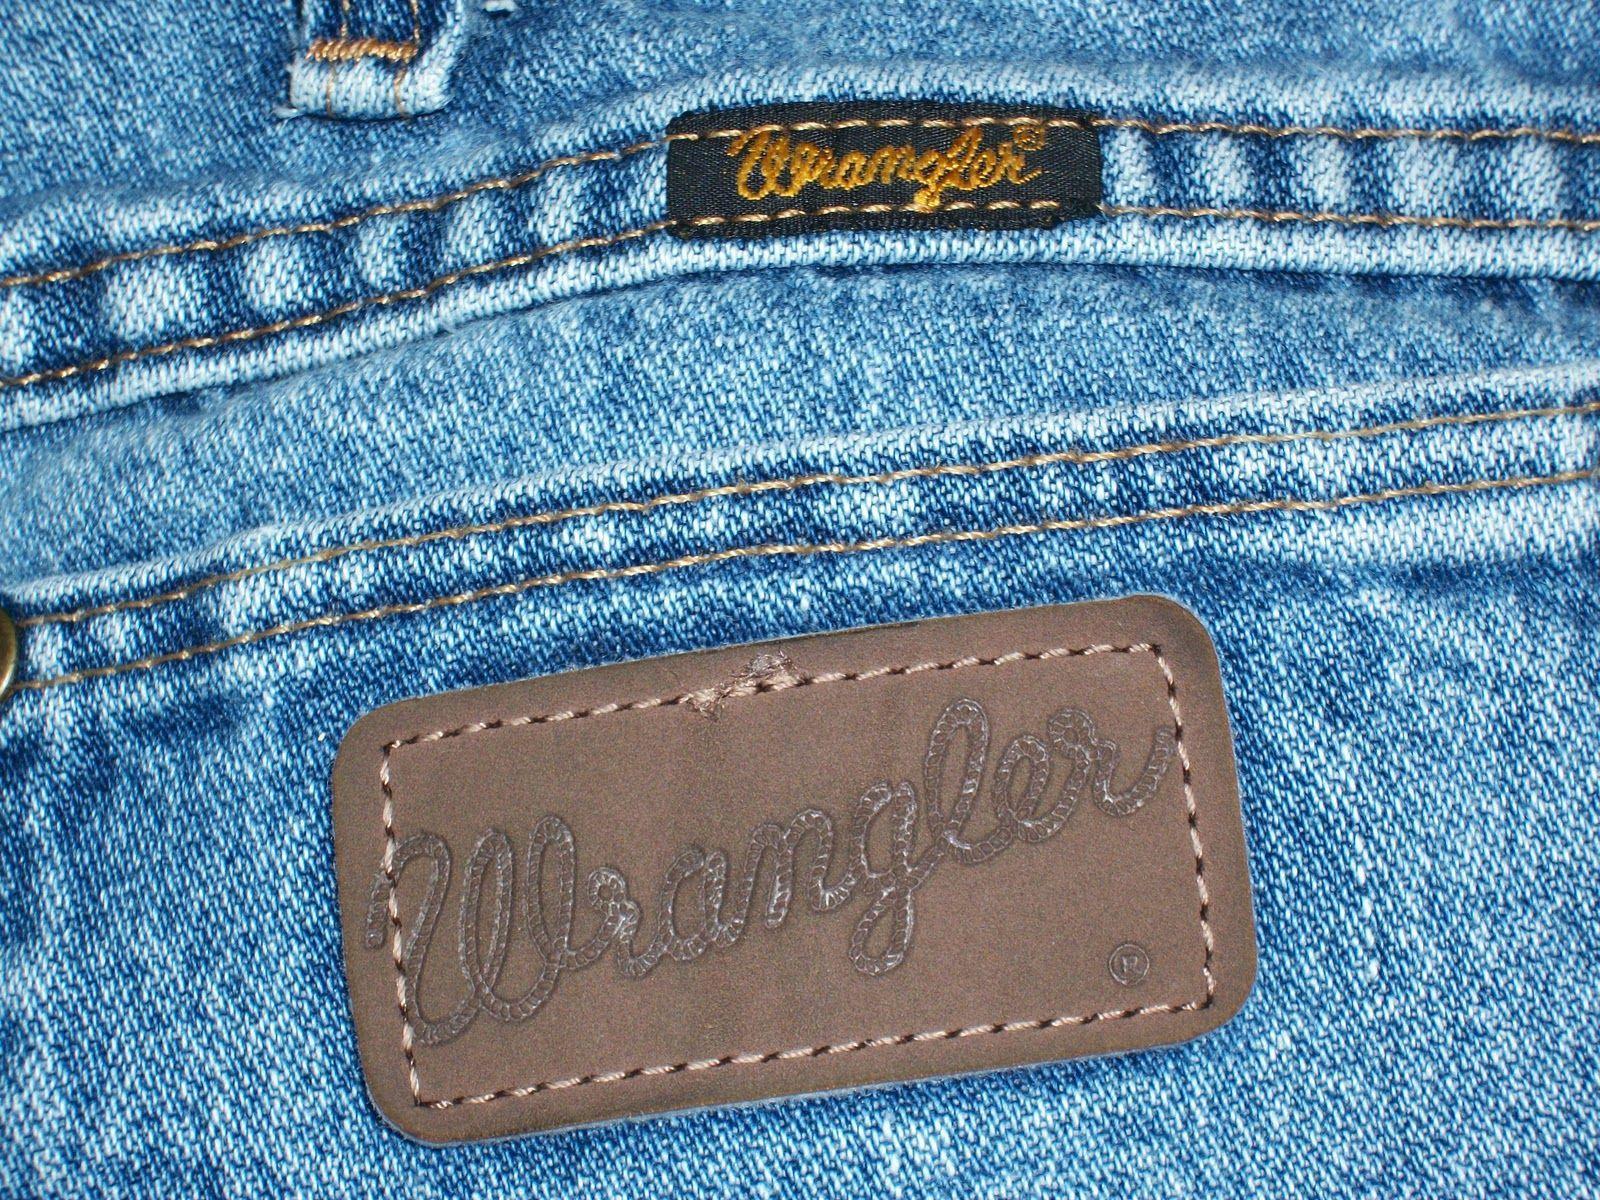 wrangler jeans logo images